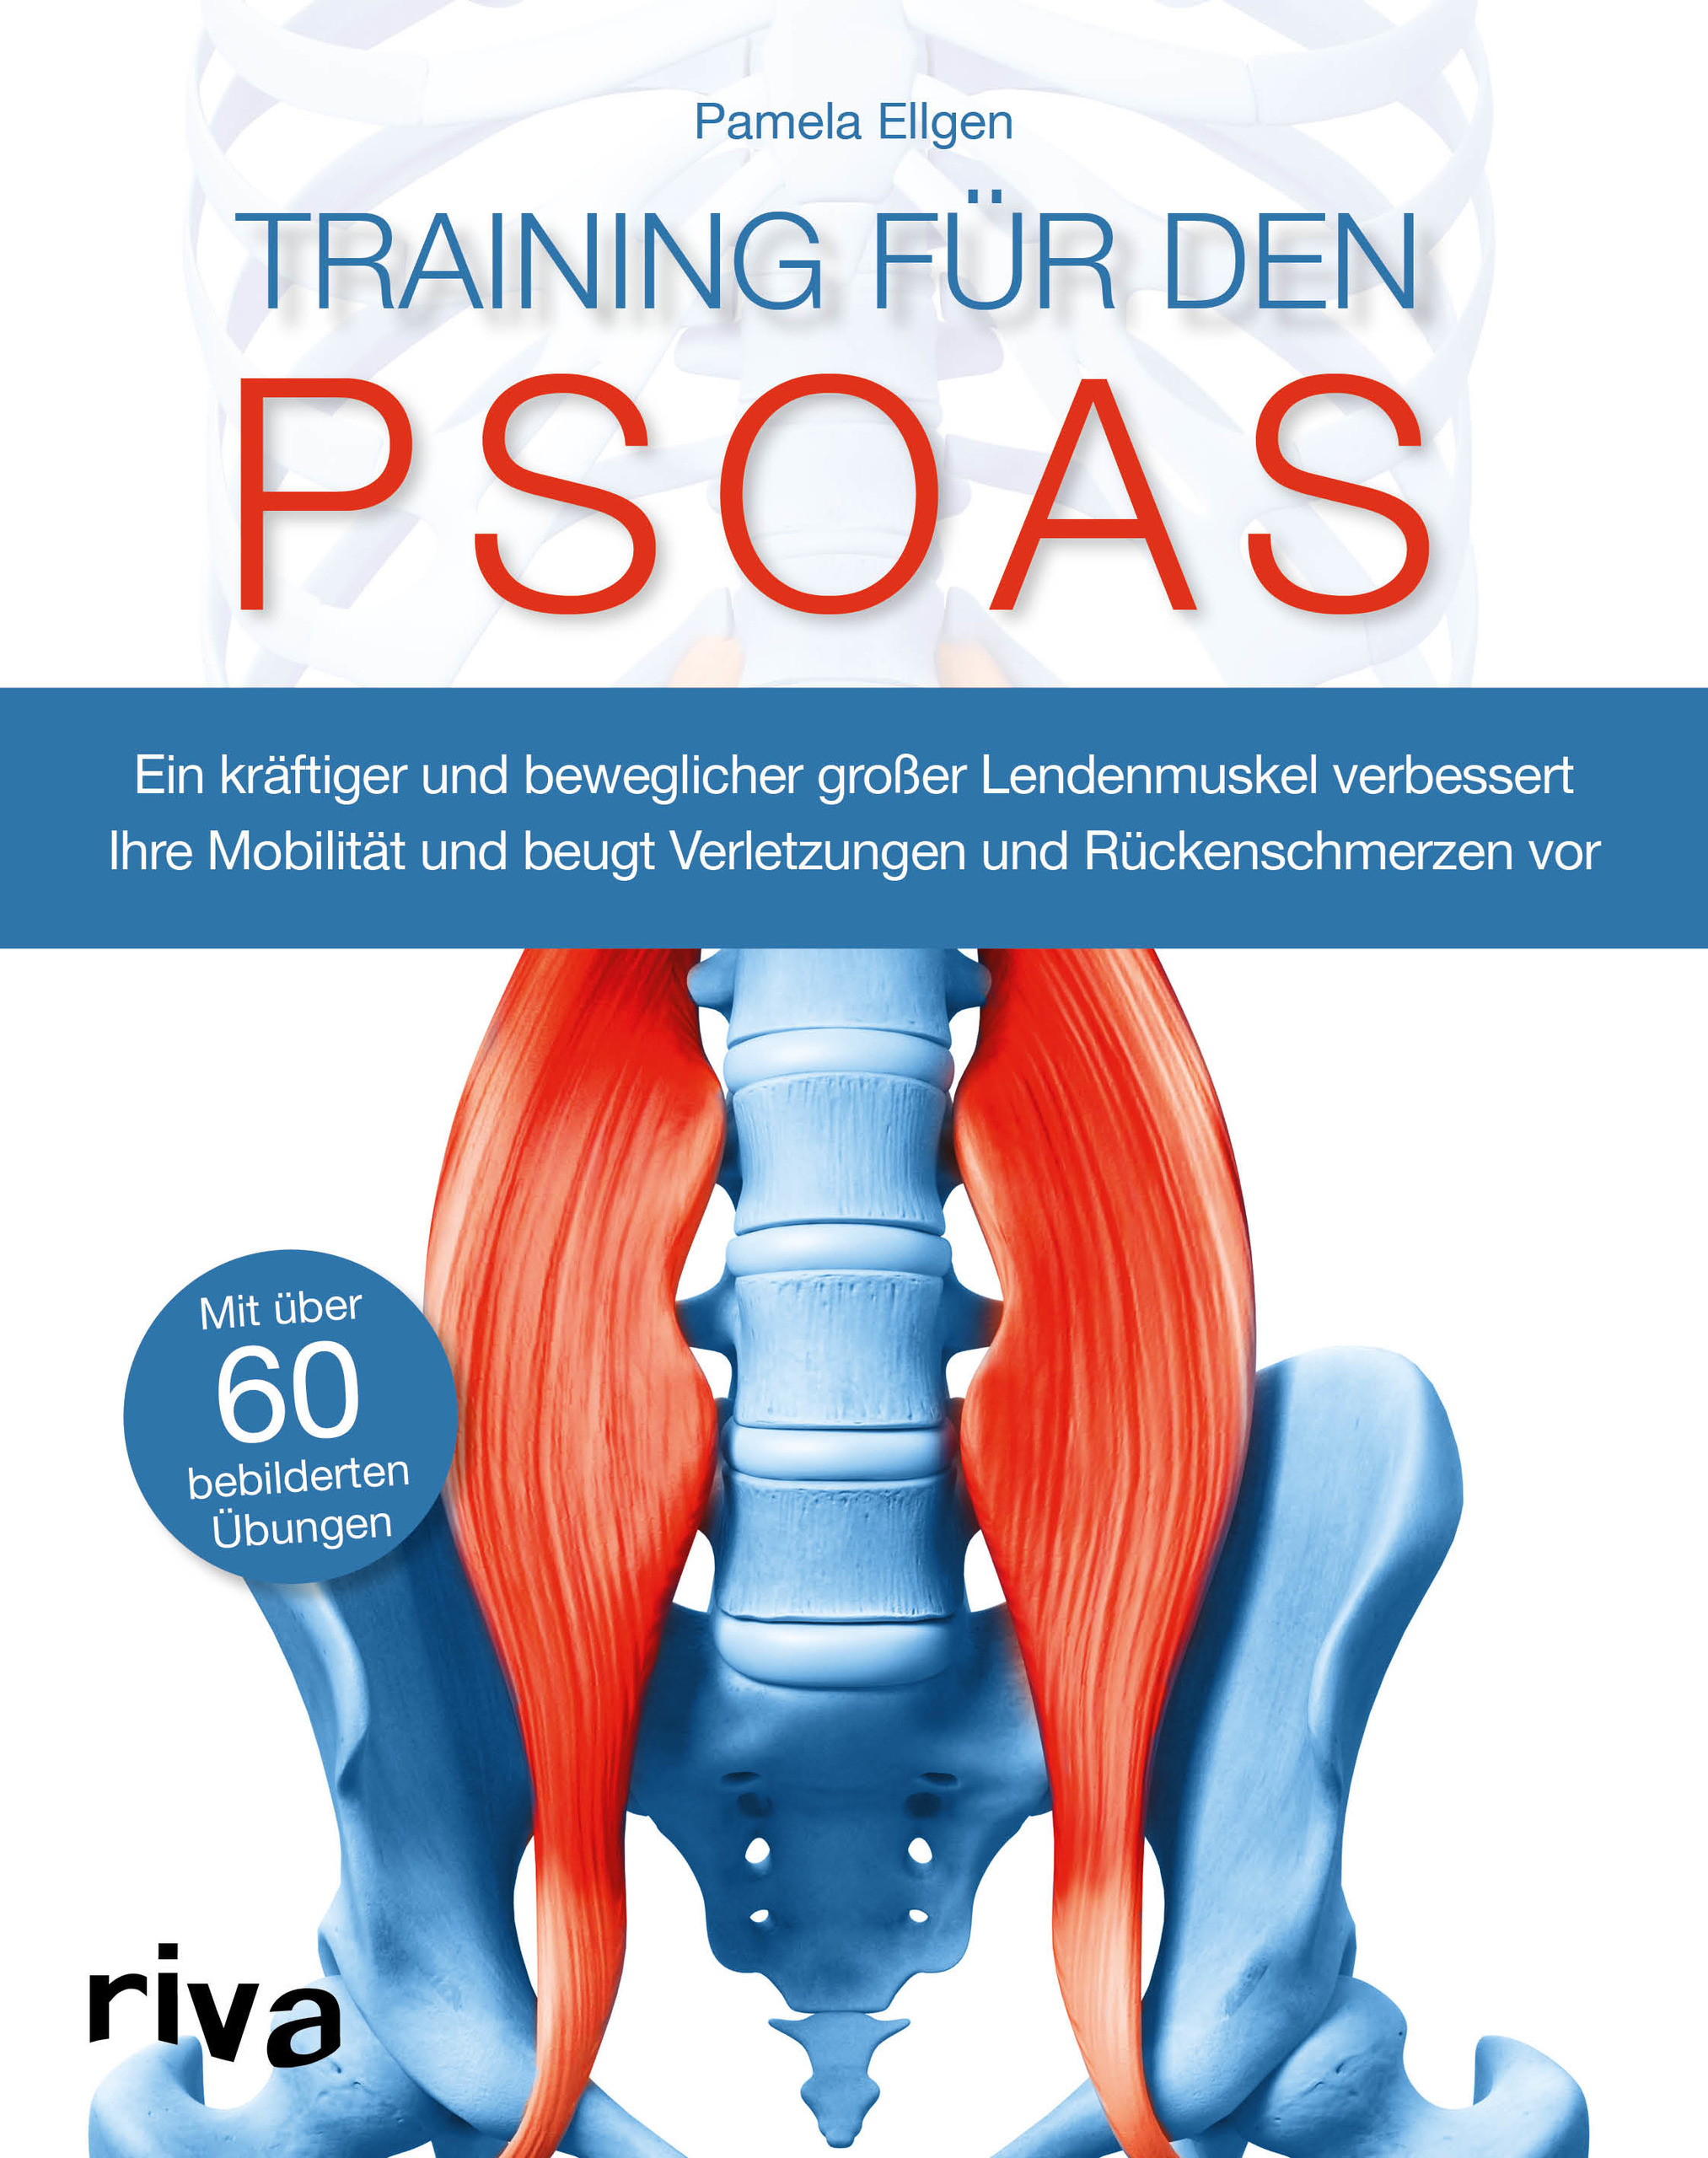 Ellgen_Psoas-Training_lowres